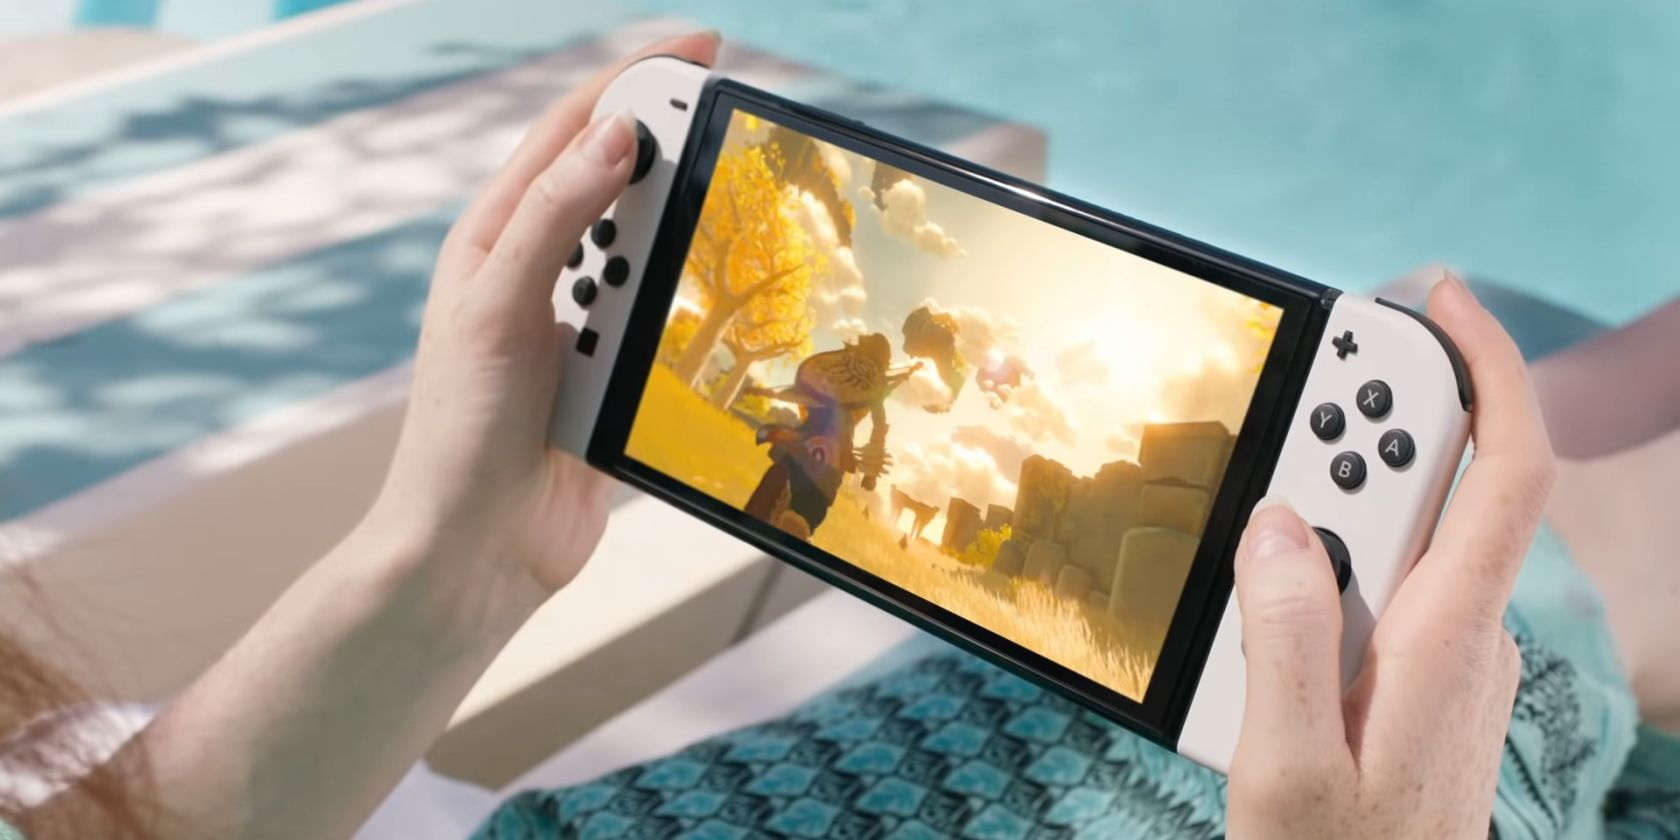 Gaming on Nintendo Switch OLED model